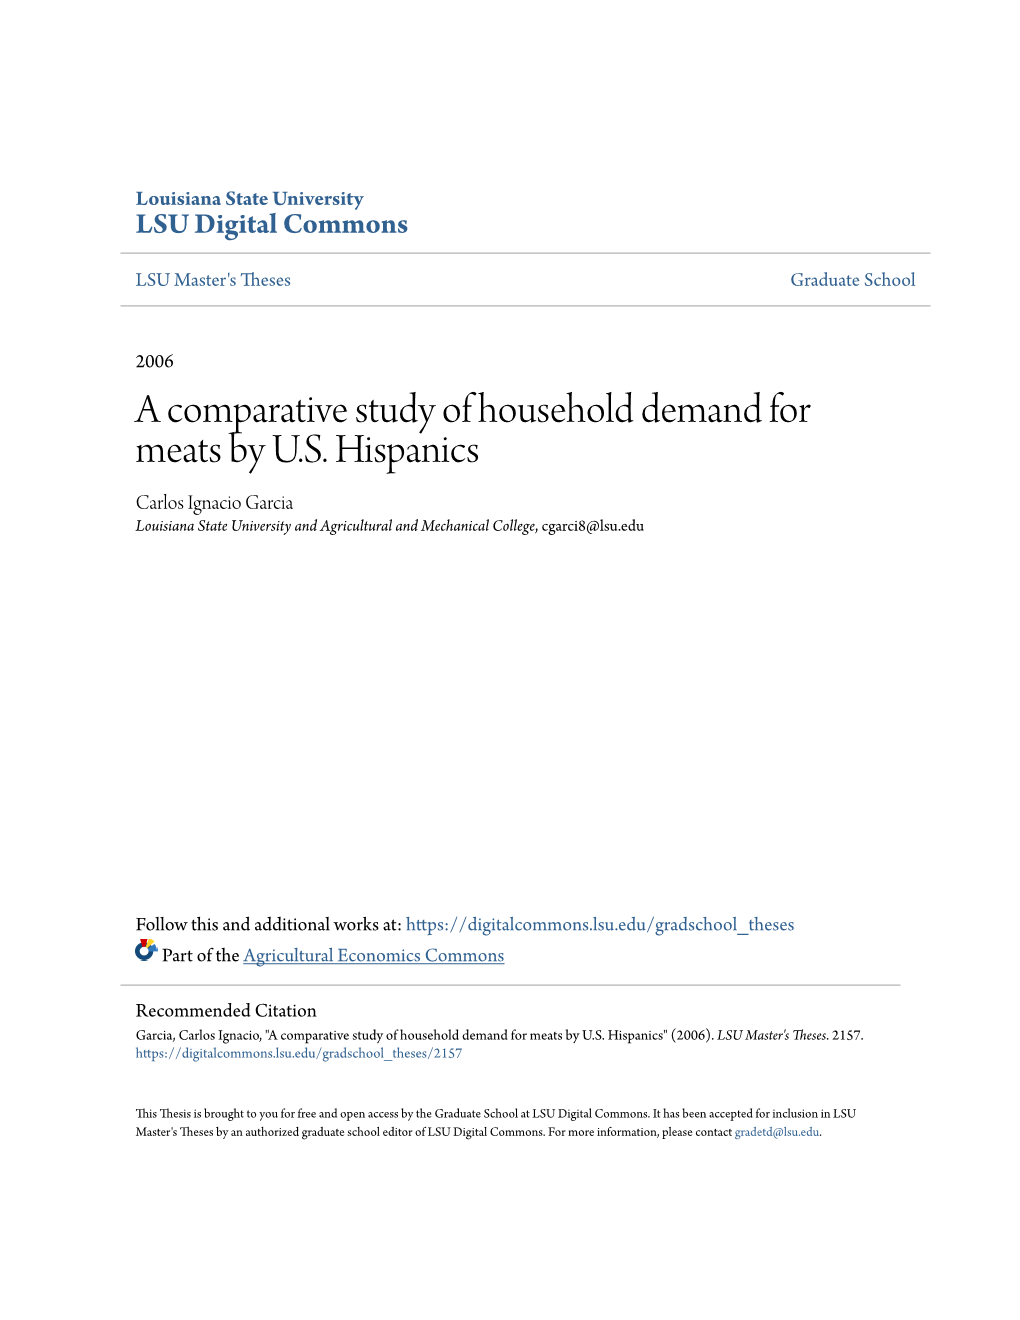 A Comparative Study of Household Demand for Meats by U.S. Hispanics